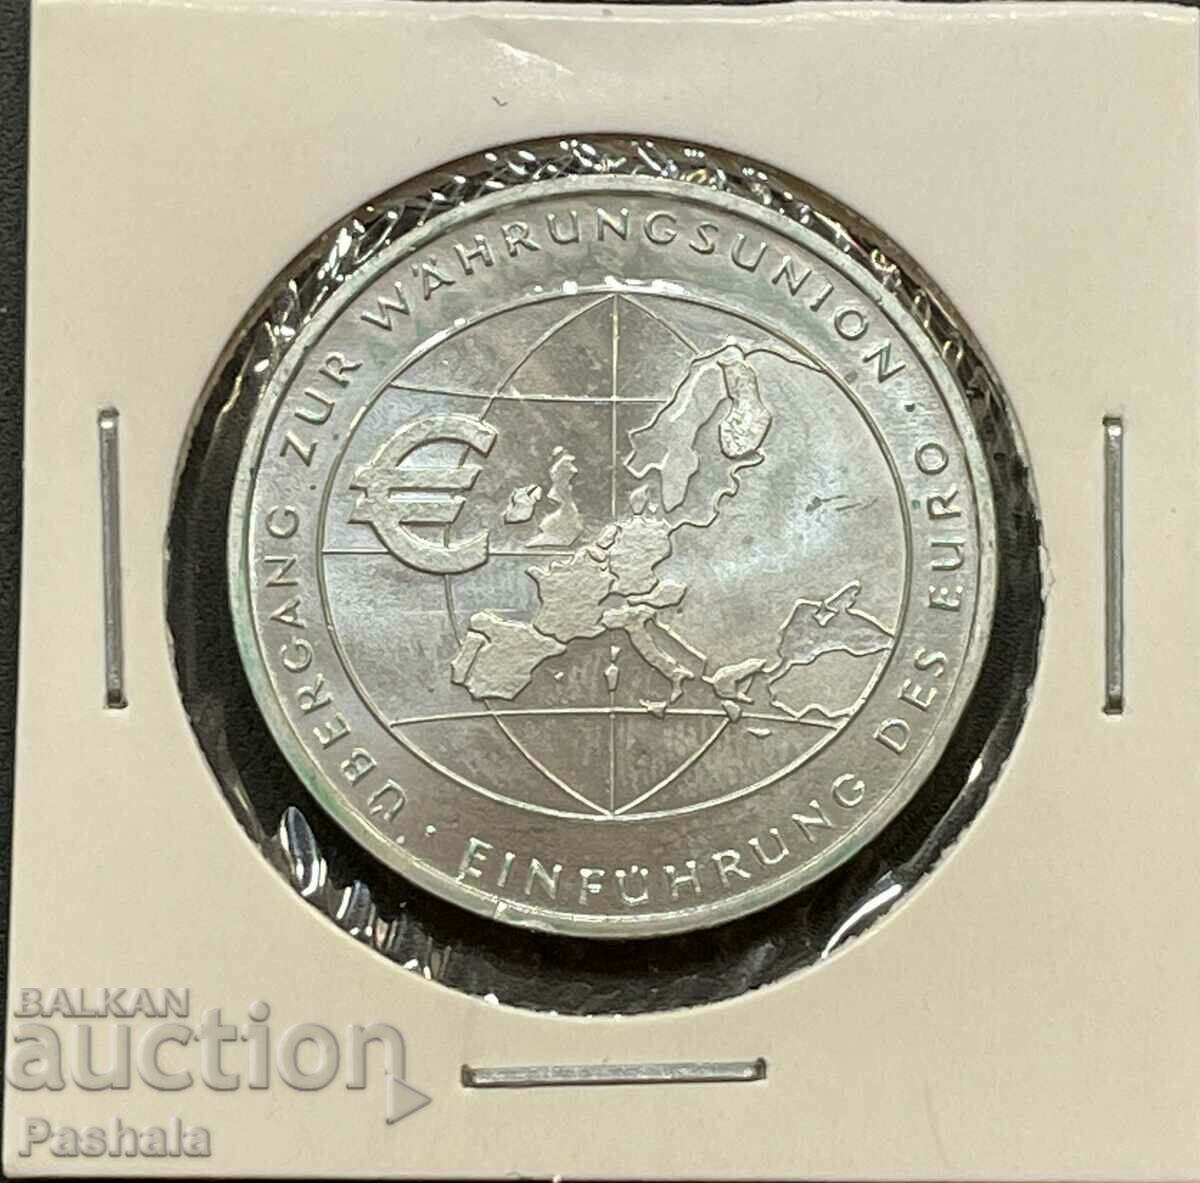 Germania 10 euro 2002